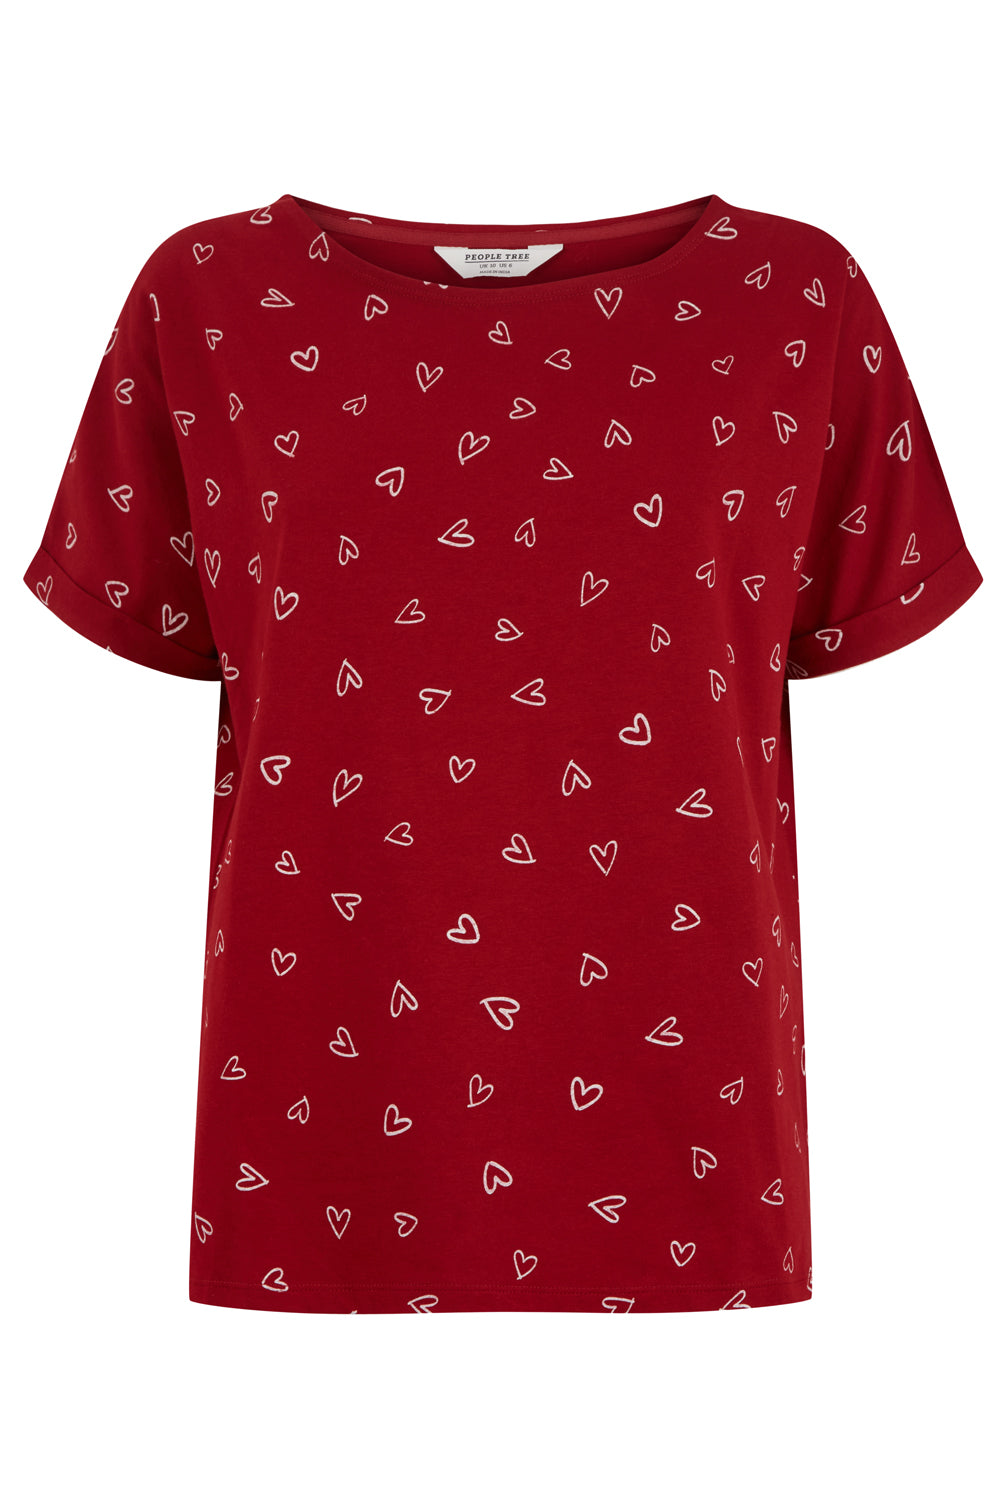 People Tree W's Hearts Pyjama Tee - 100% Organic Certified Cotton Red Underwear